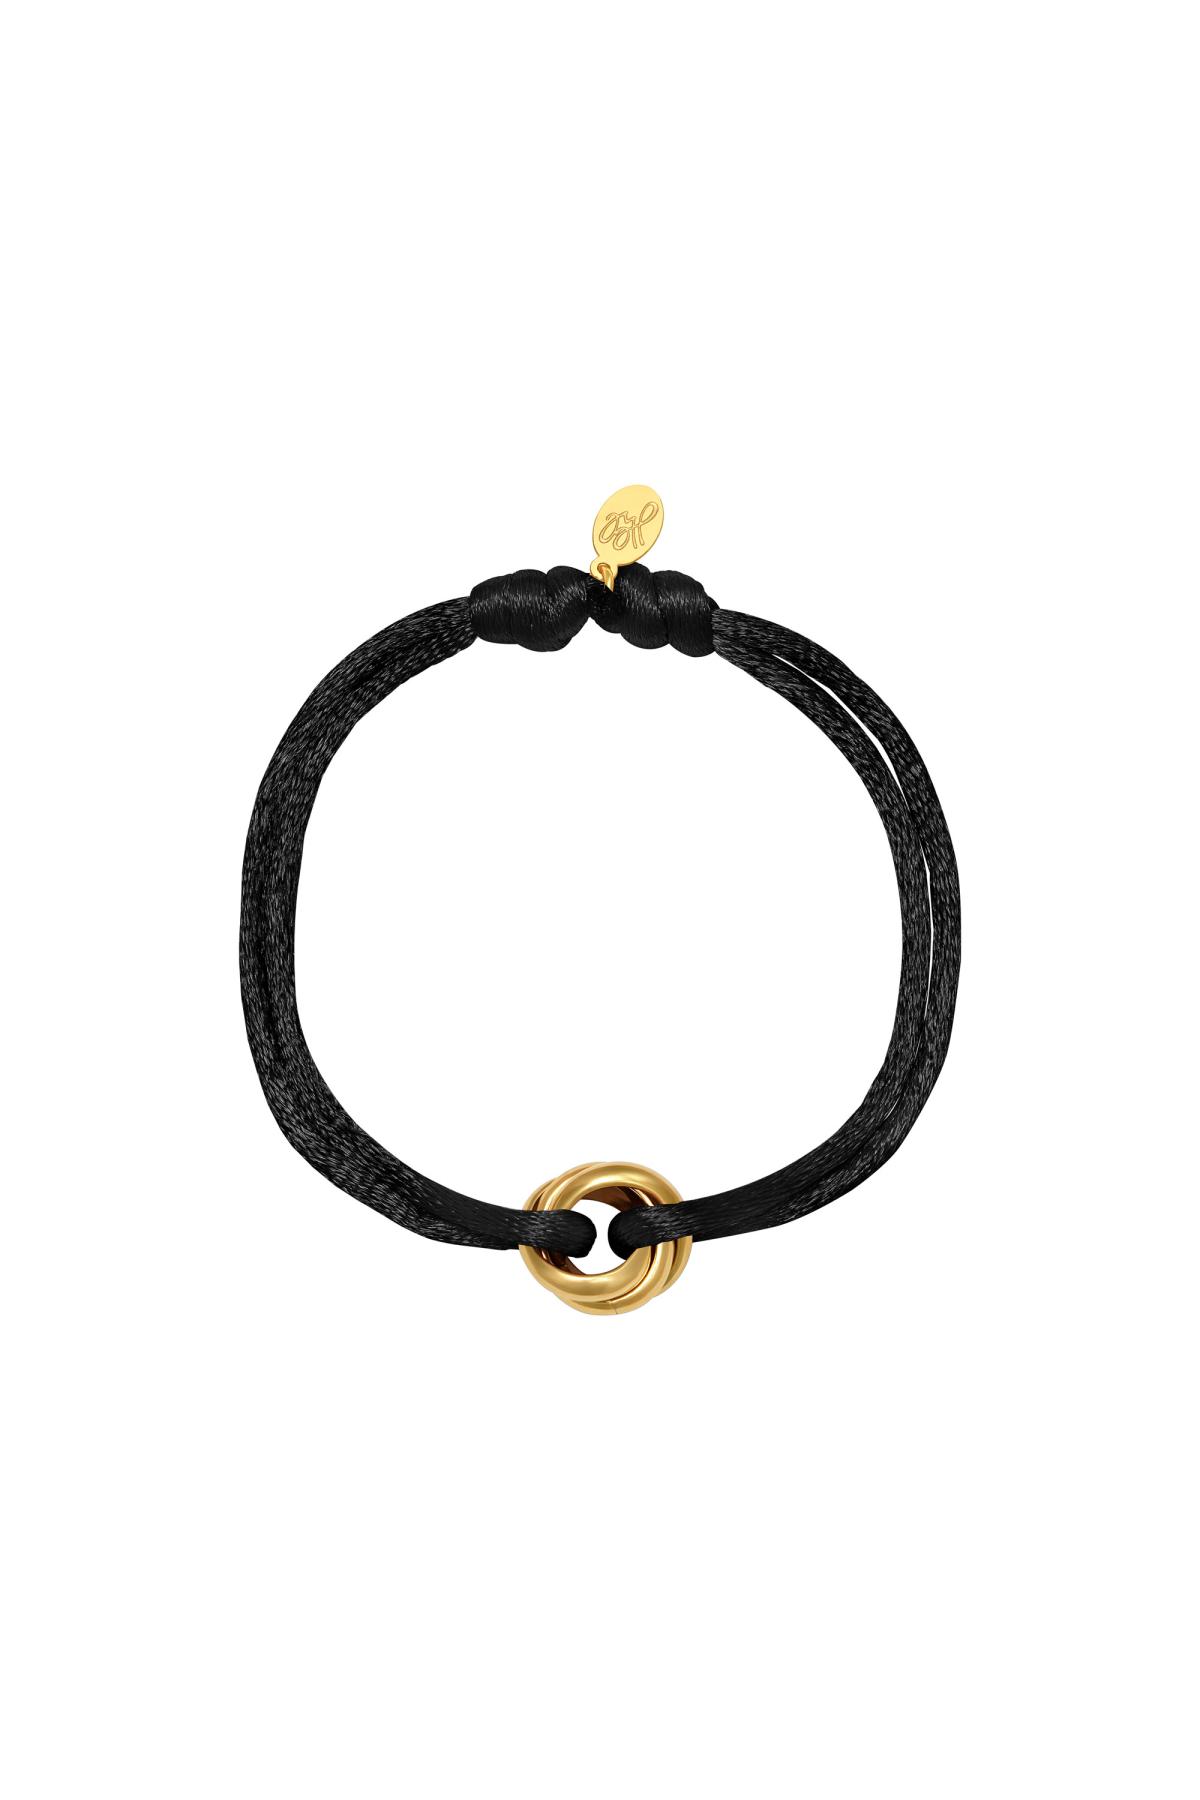 Noir & Or / Bracelet Satin Knot Noir & Or Acier inoxydable 